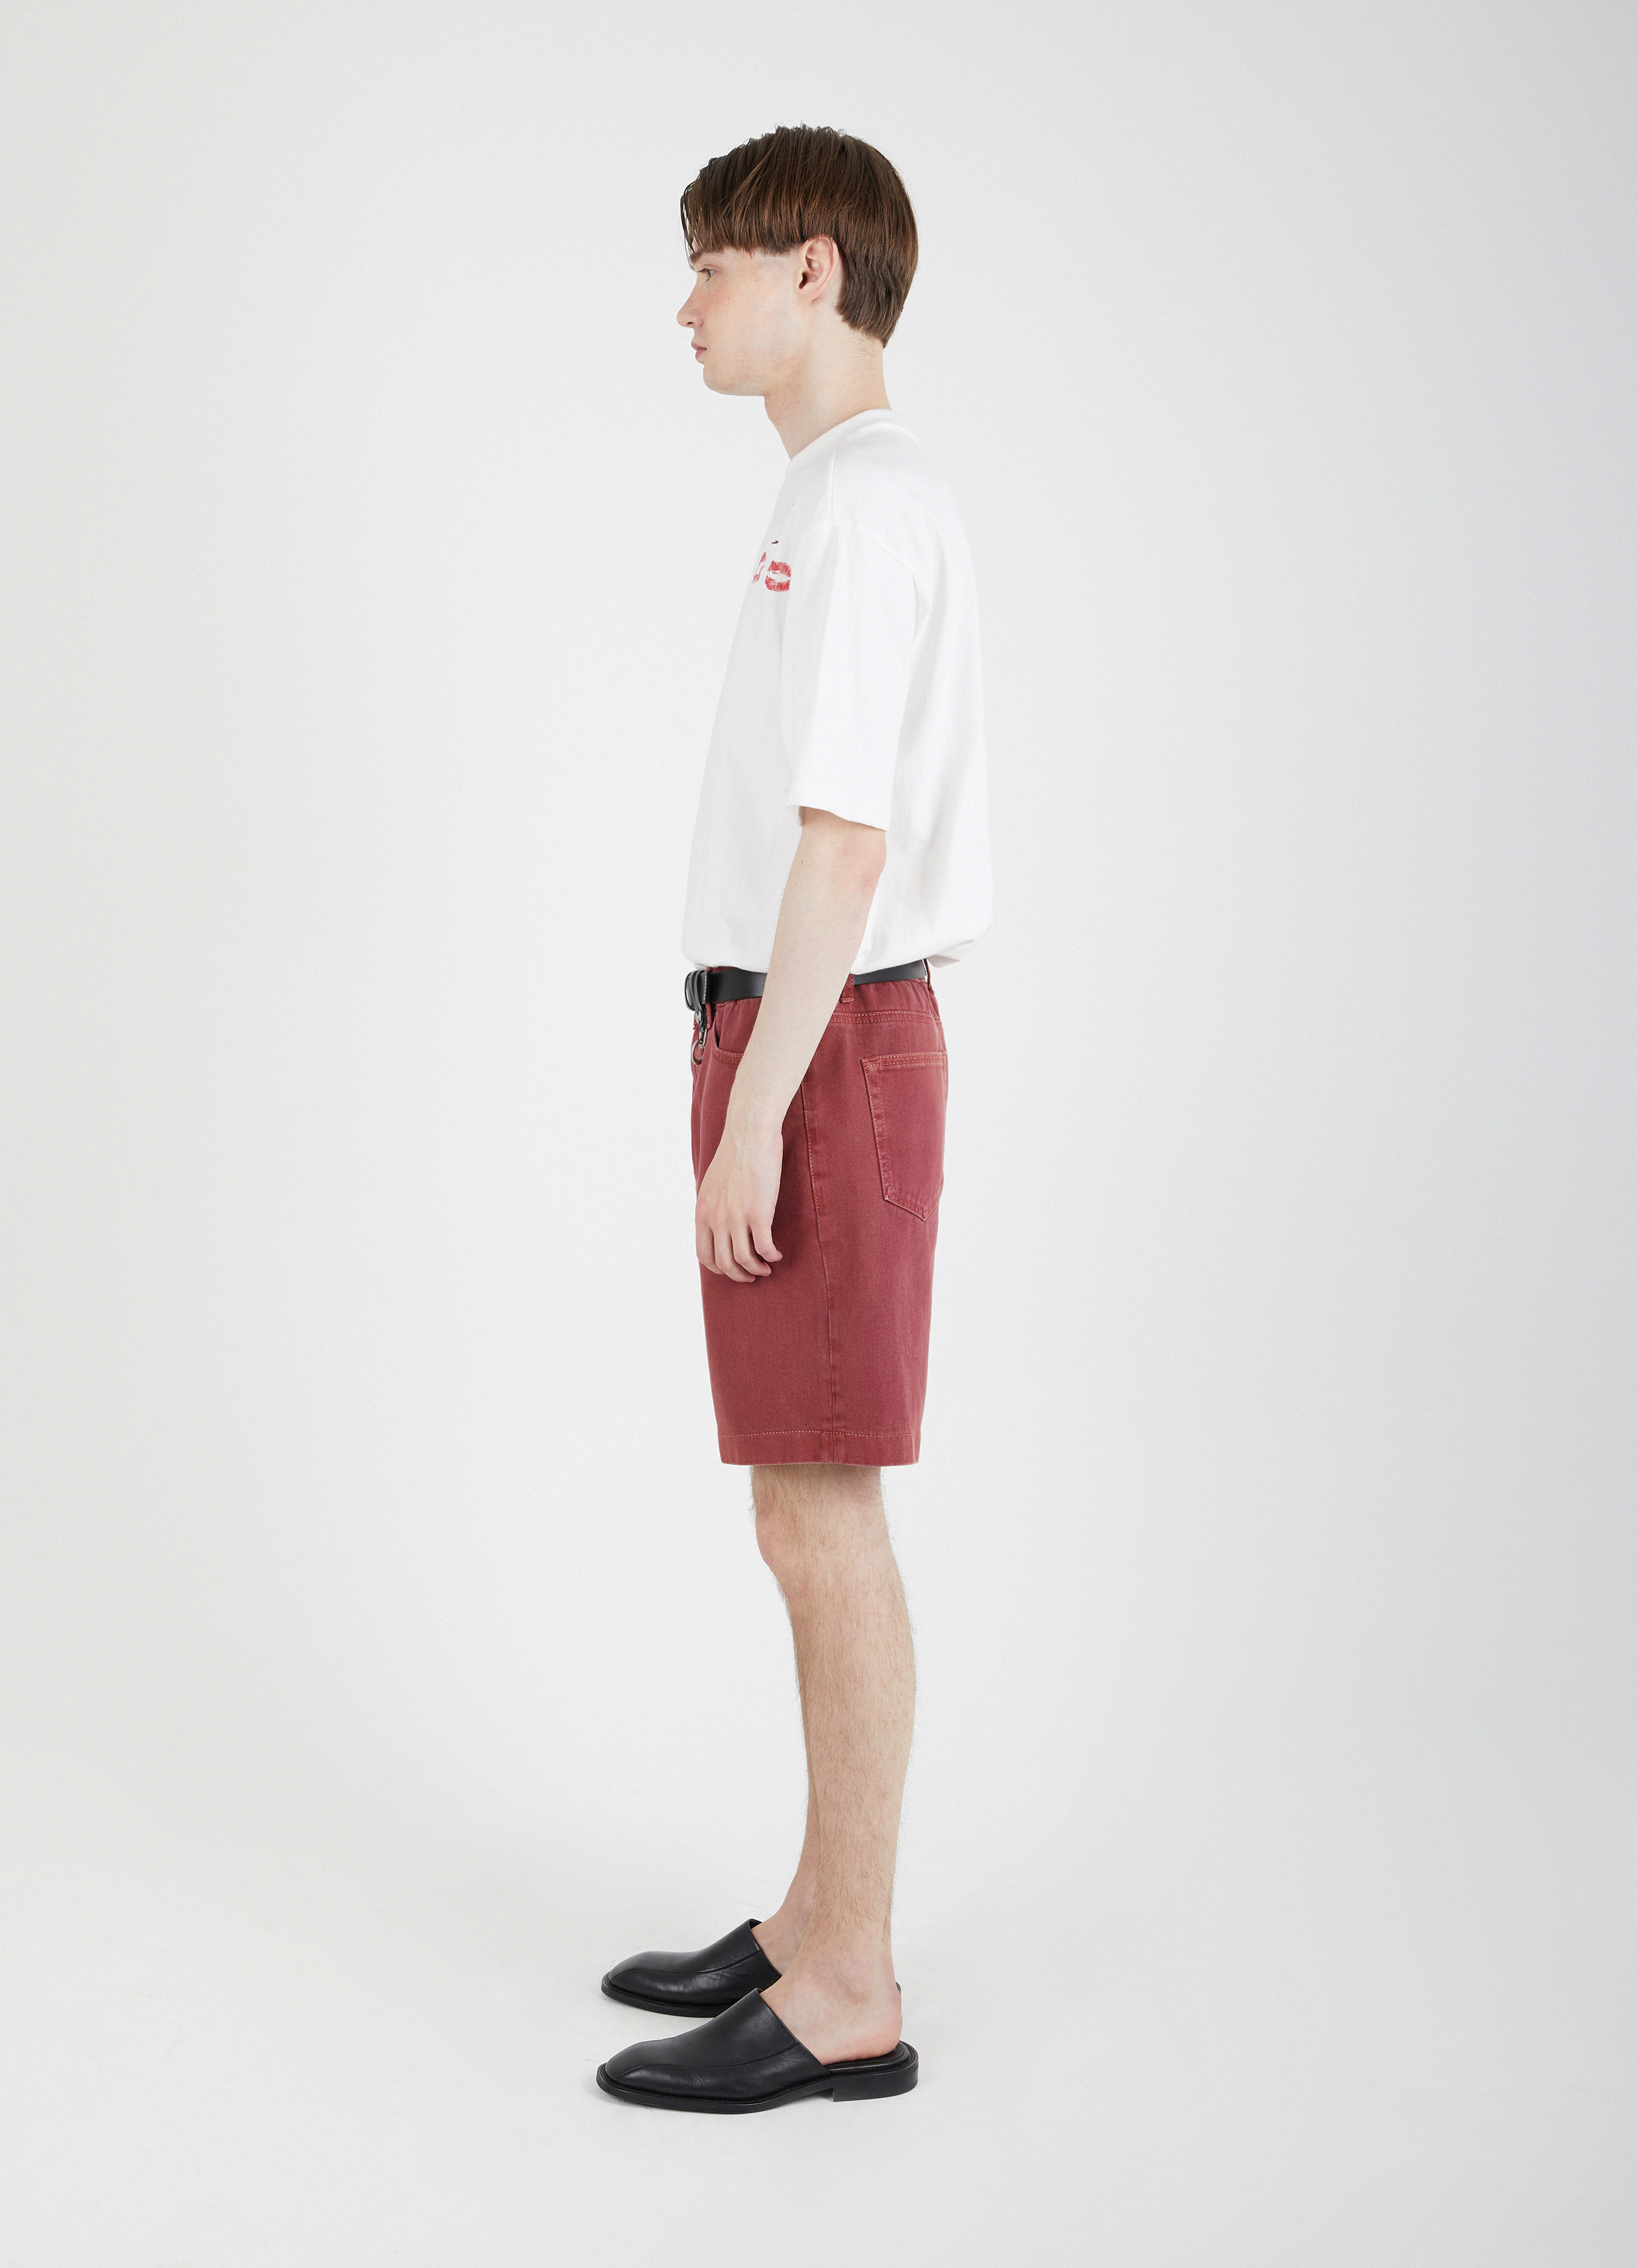 Newtro Denim Shorts - Cranberry